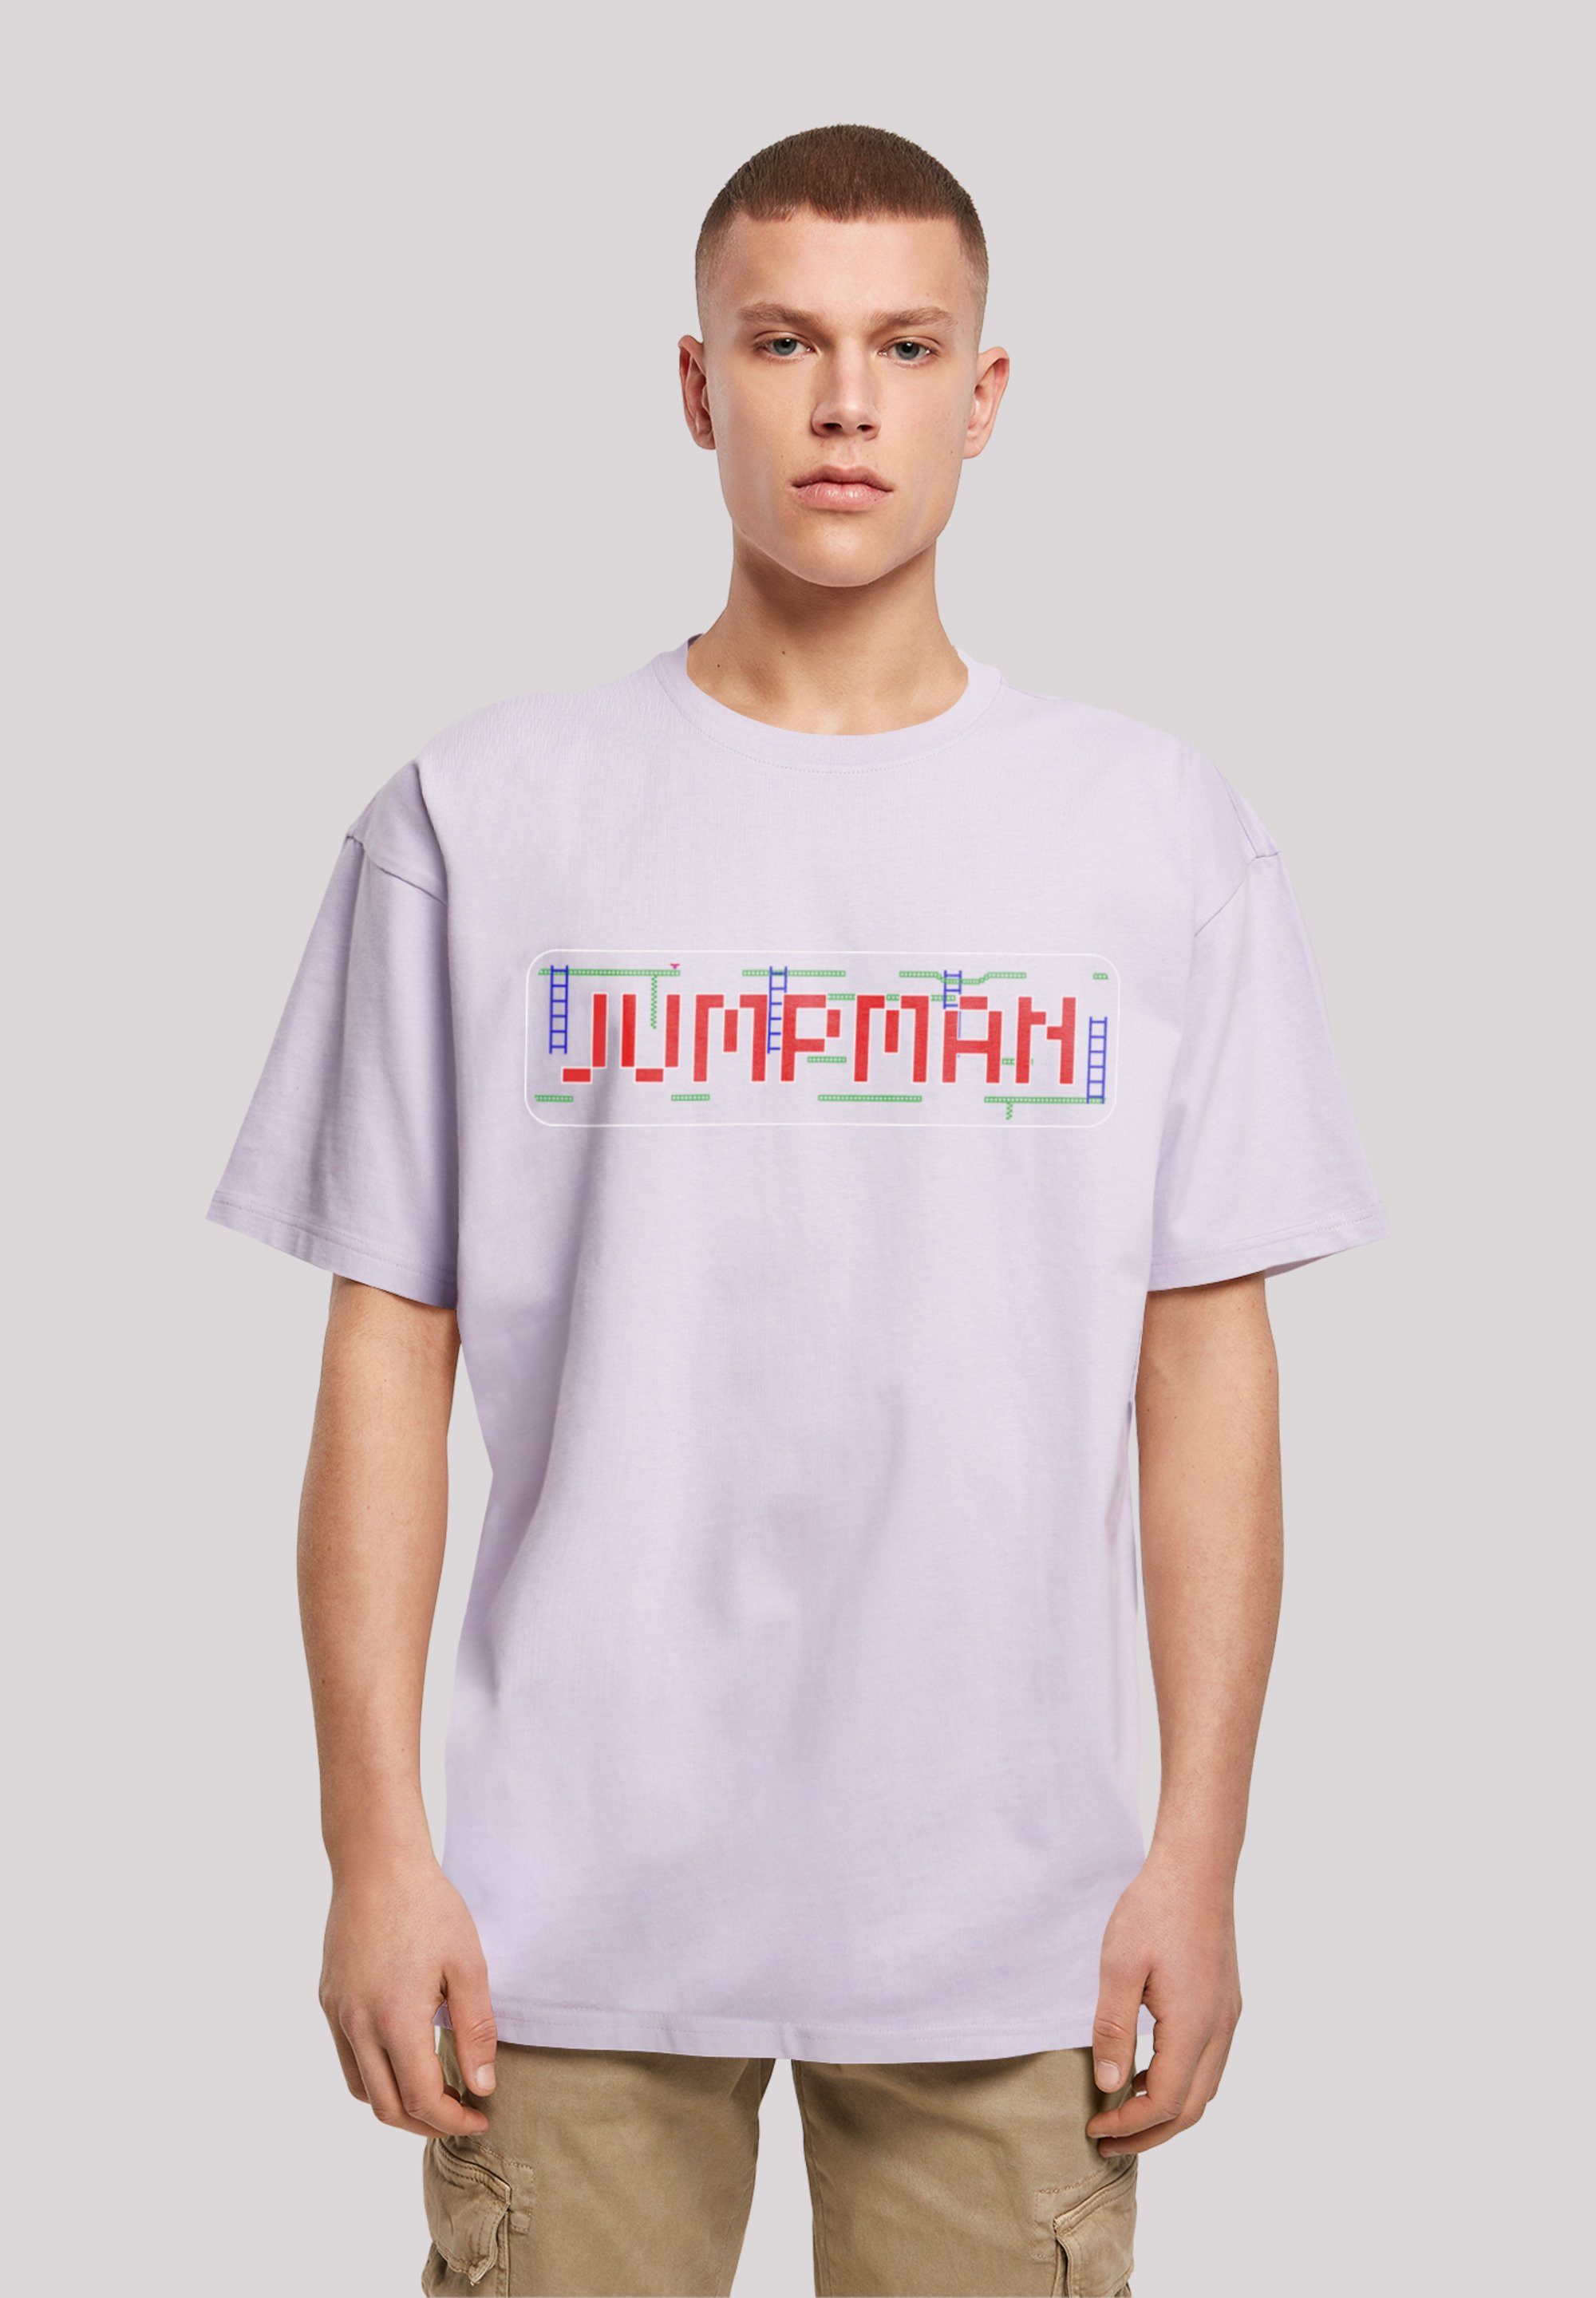 F4NT4STIC T-Shirt Jumpman C64 Retro Gaming SEVENSQUARED Print lilac | T-Shirts